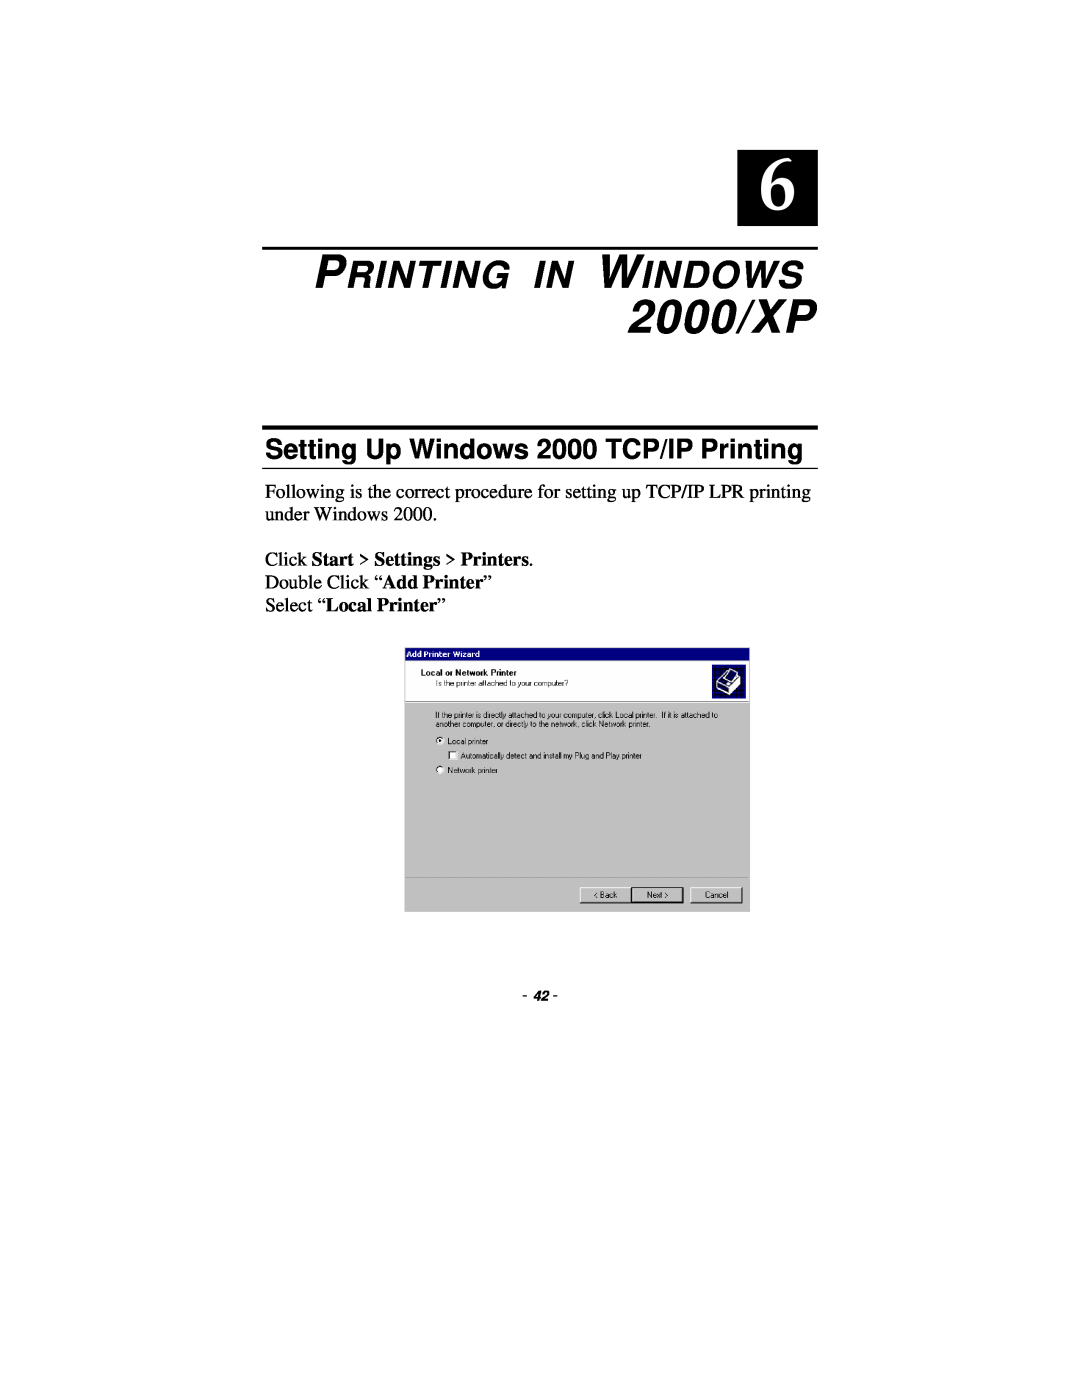 TRENDnet TE100-P1P 2000/XP, Printing In Windows, Setting Up Windows 2000 TCP/IP Printing, Click Start Settings Printers 